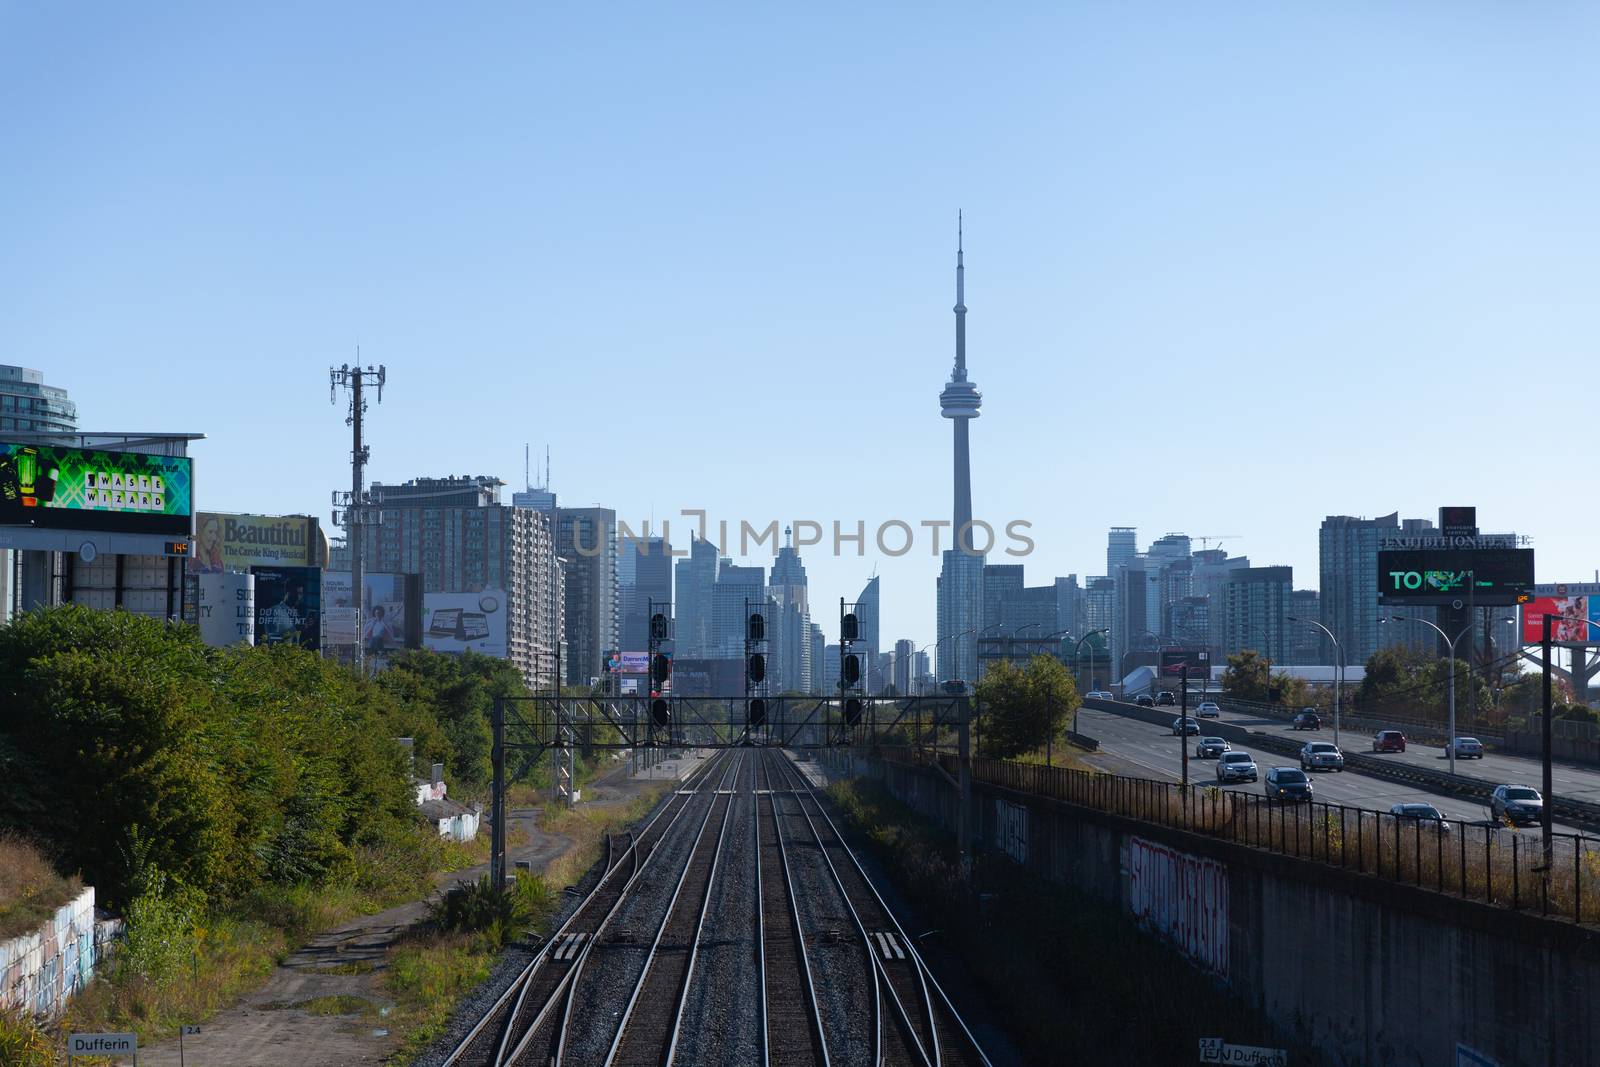 Railway in Toronto, Canada by vlad-m